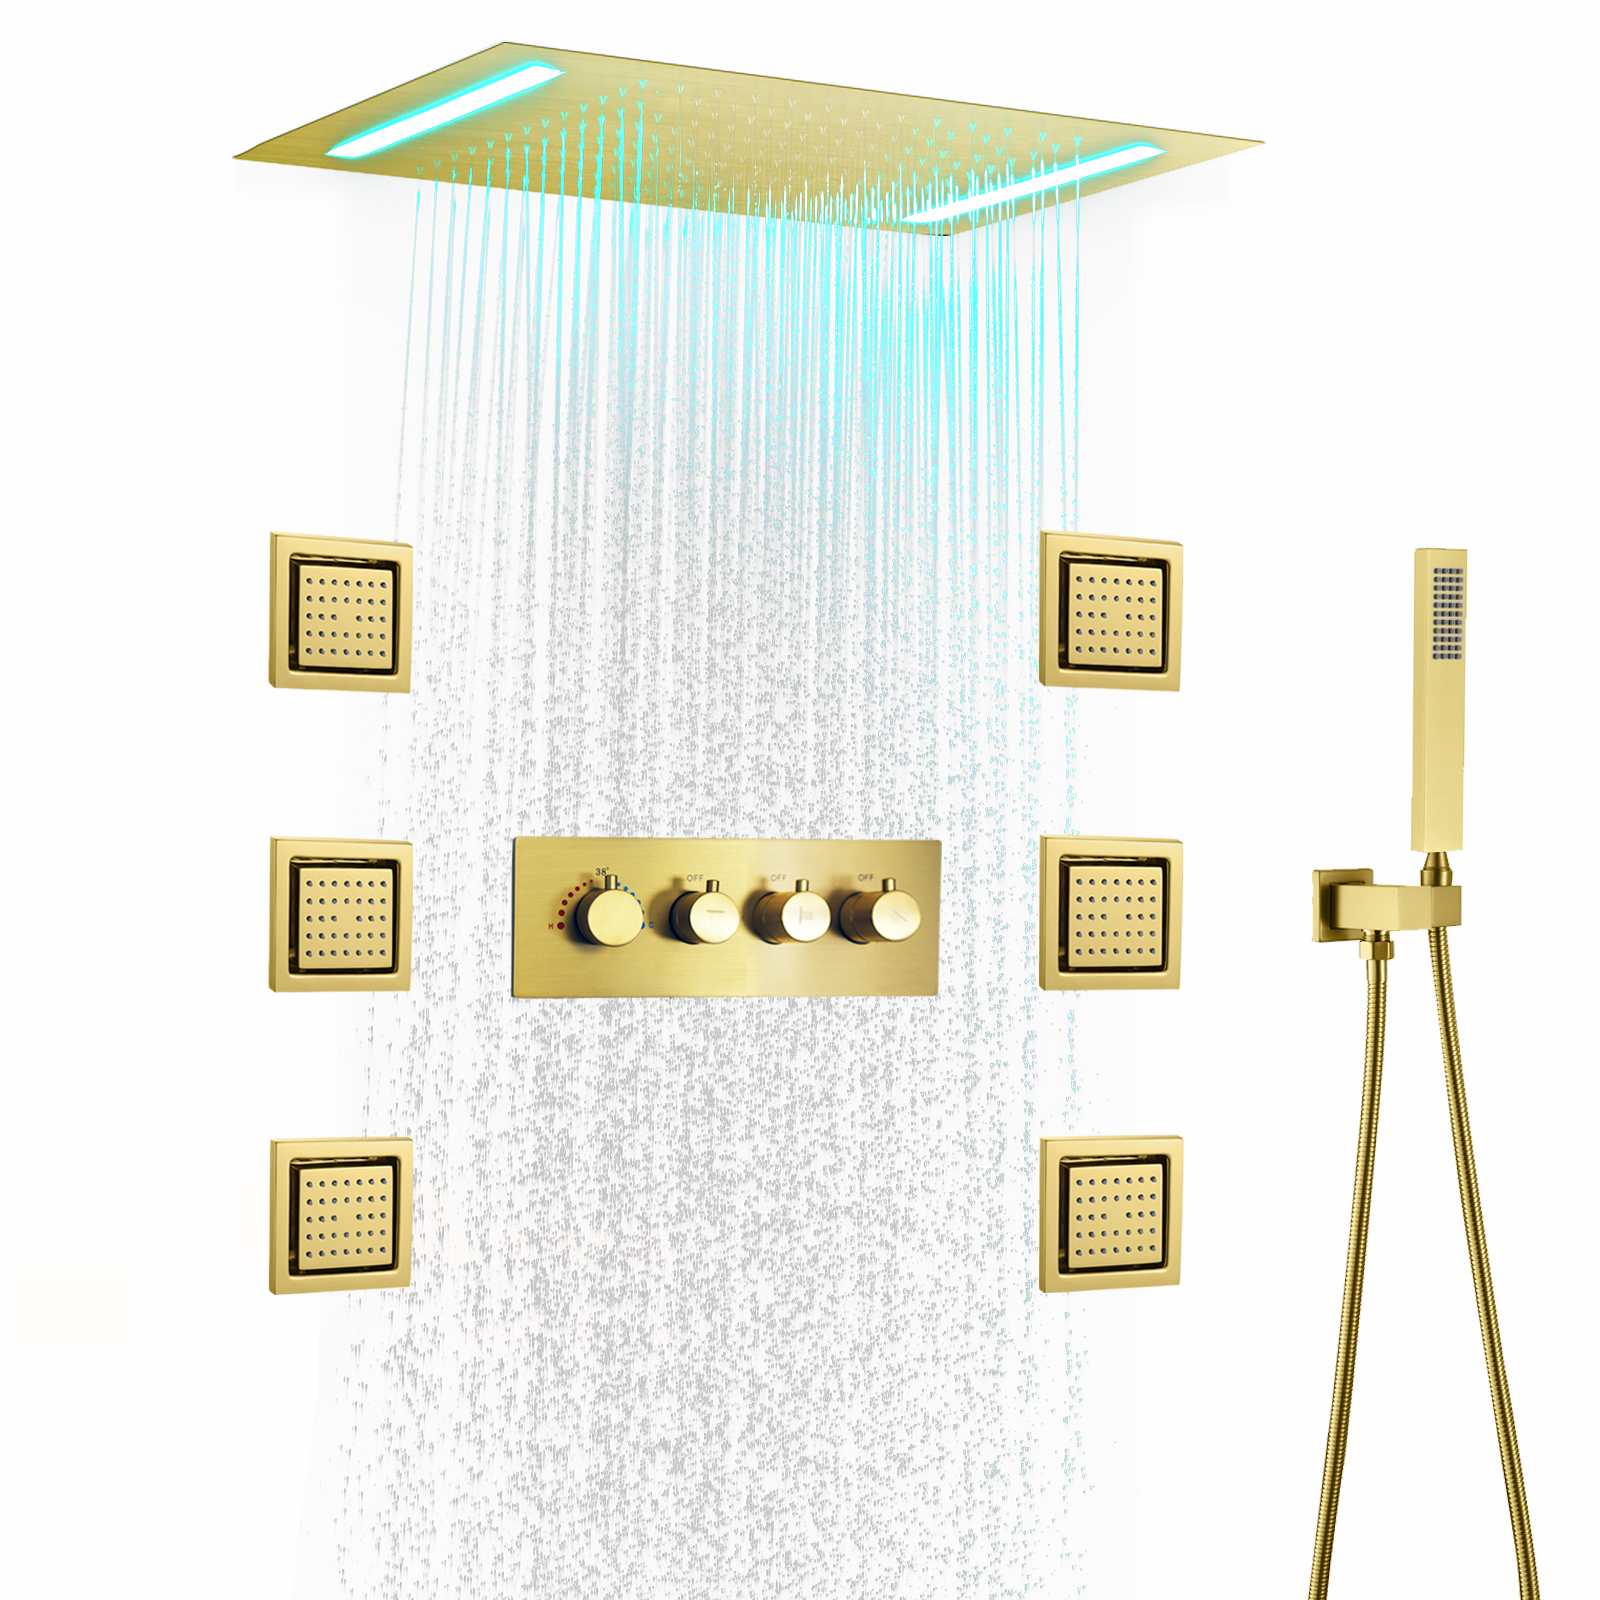 Mattic Black 50x36cm Bathroom LED Dark Dressing Shower Head And Faucet Suite Multi -function Rainwater Shower Massage SPA Set